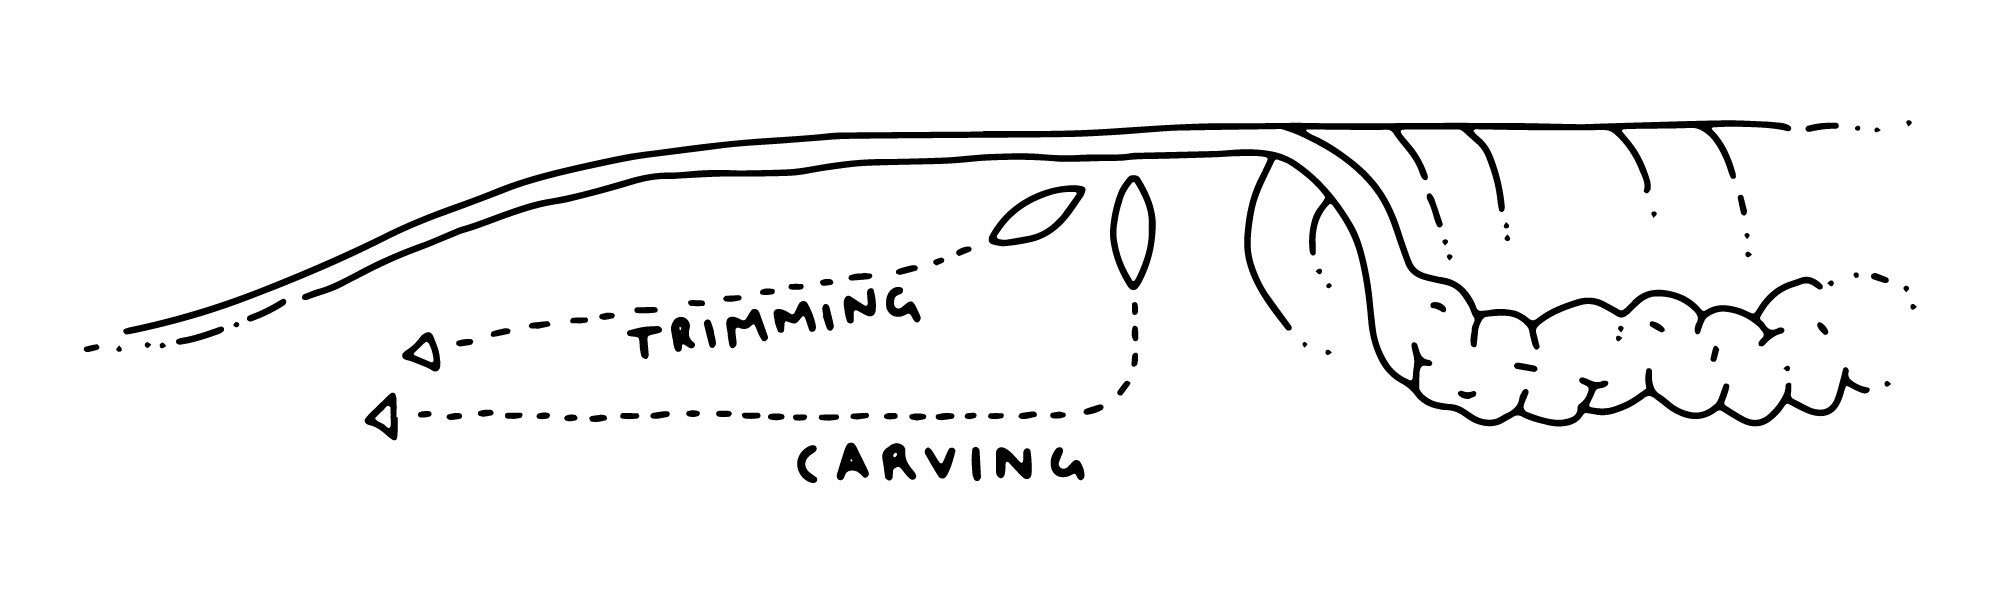 Illustration Trimming VS Carving Surf